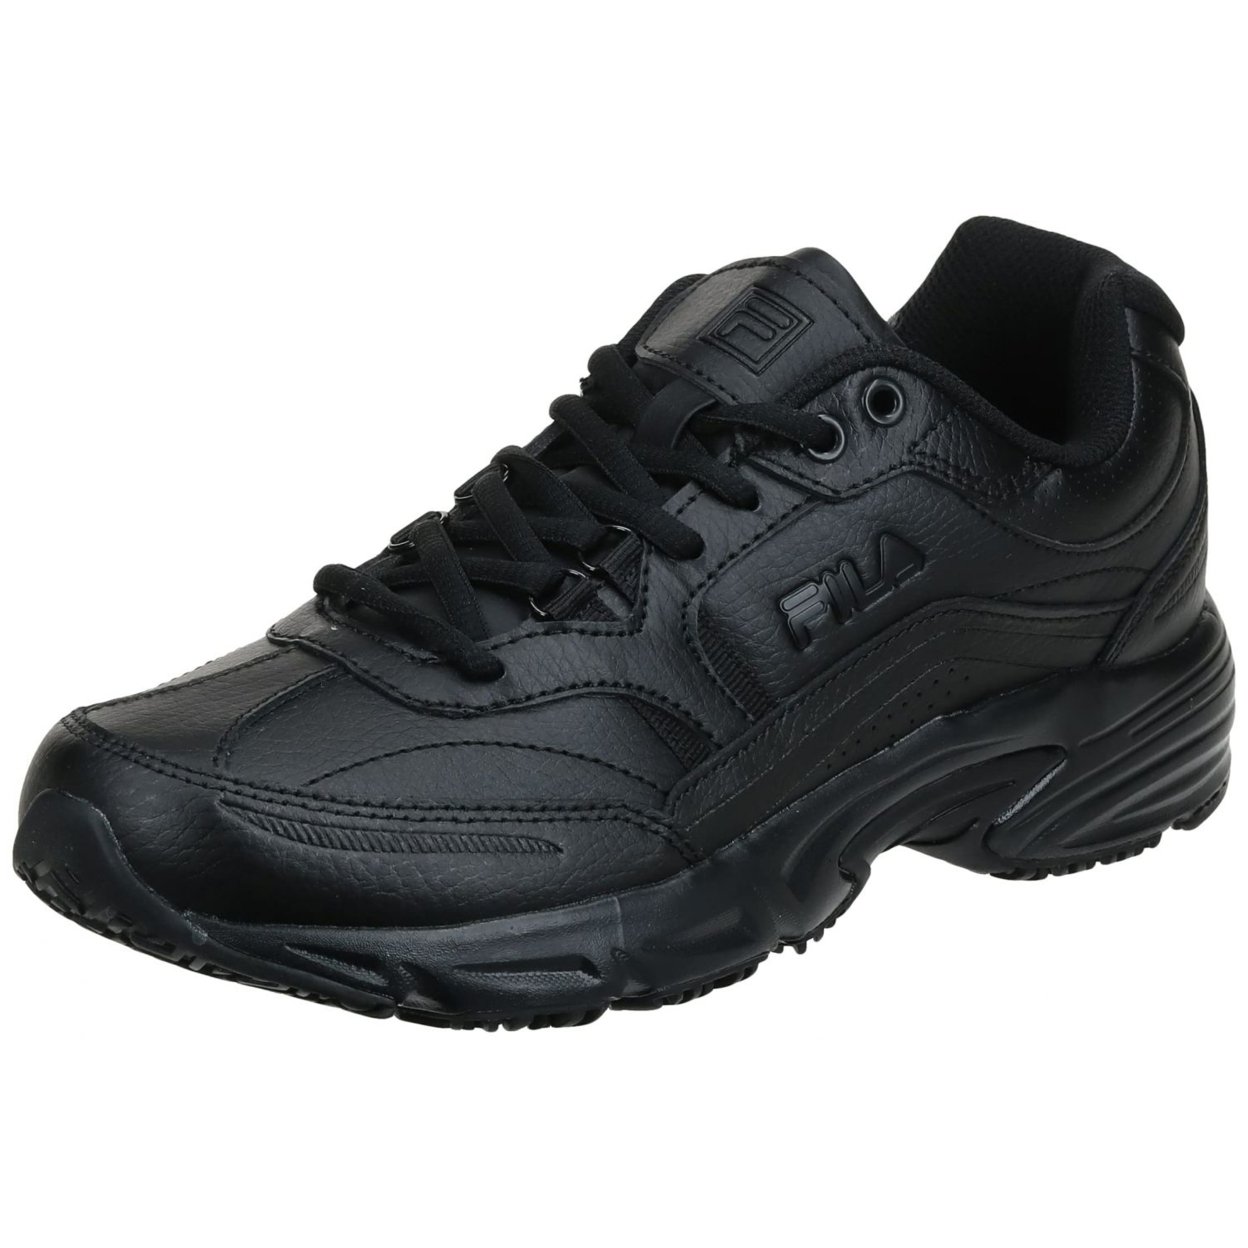 Fila Men's Memory Workshift-m Shoes M US Men BLK/BLK/BLK - Black, 7.5